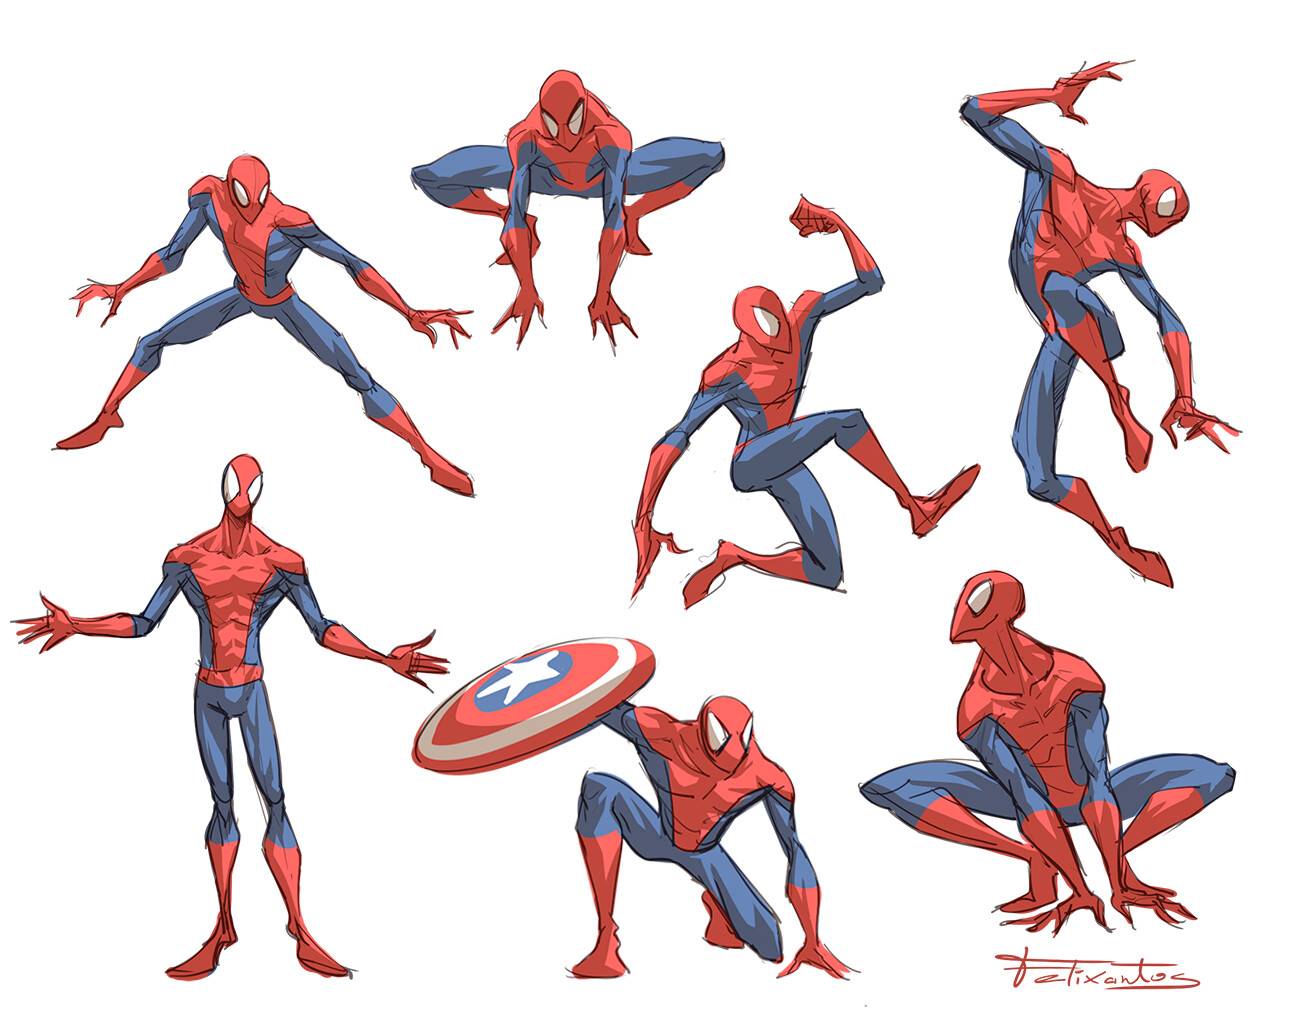 ArtStation - Spiderman Sketchs